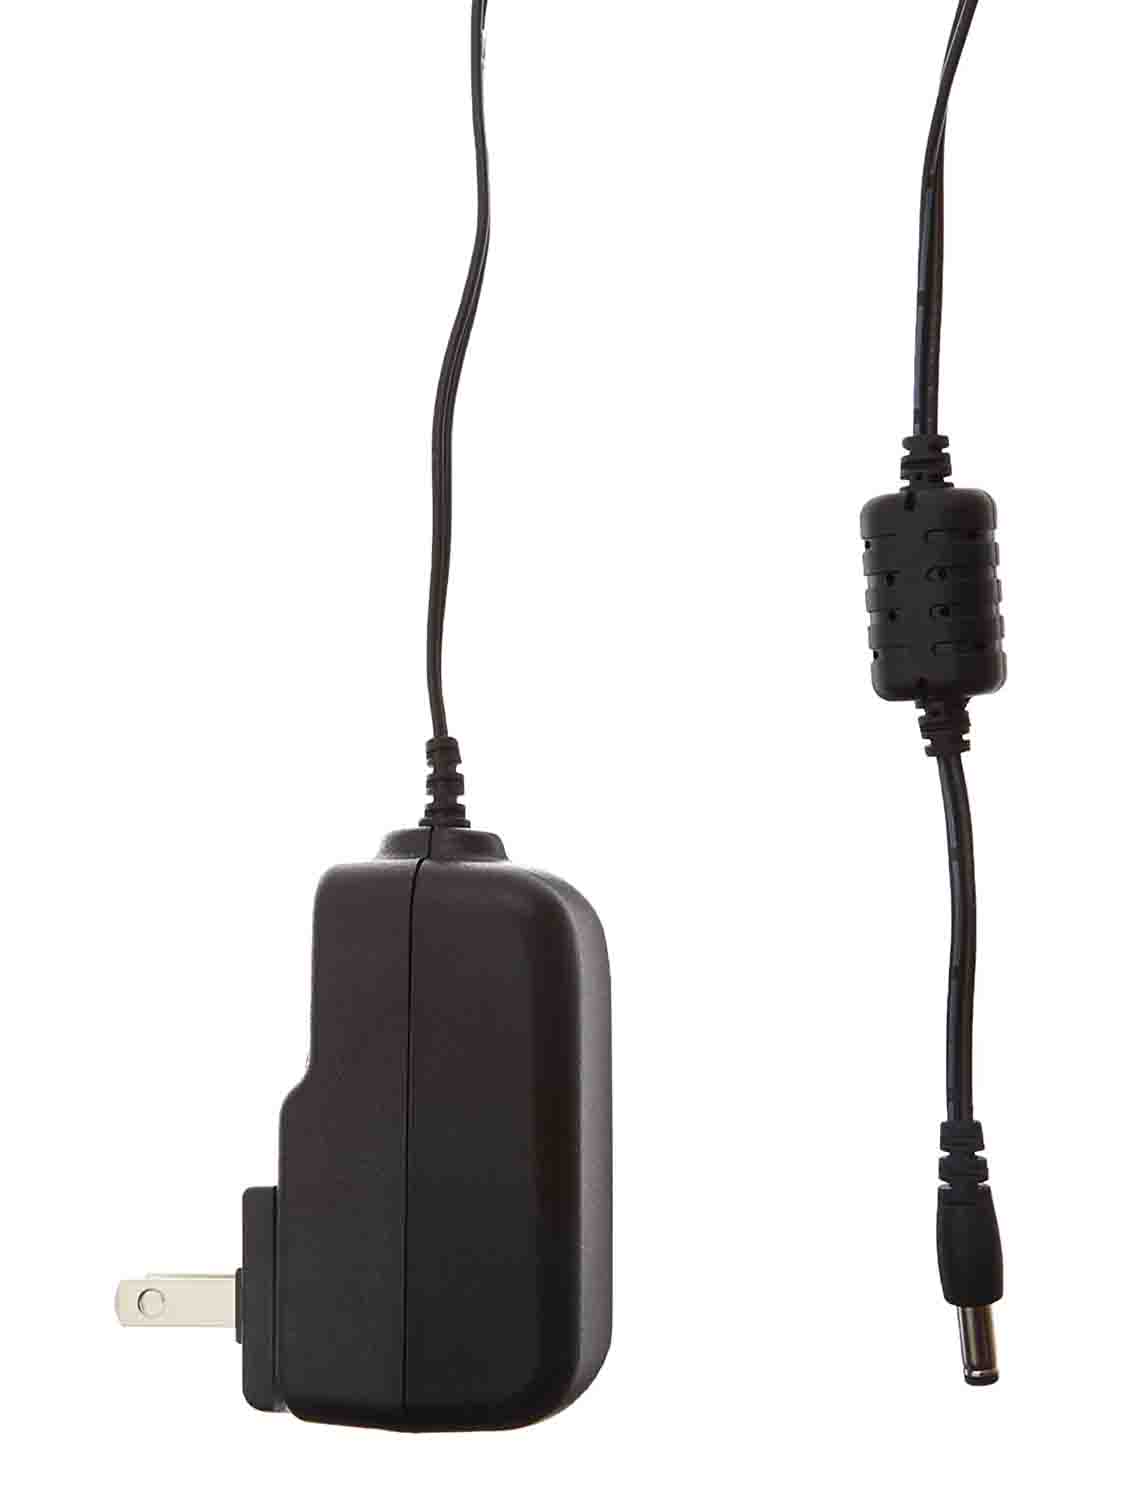 Samson AC500 AC Power Adapter for Wireless Receivers - Hollywood DJ